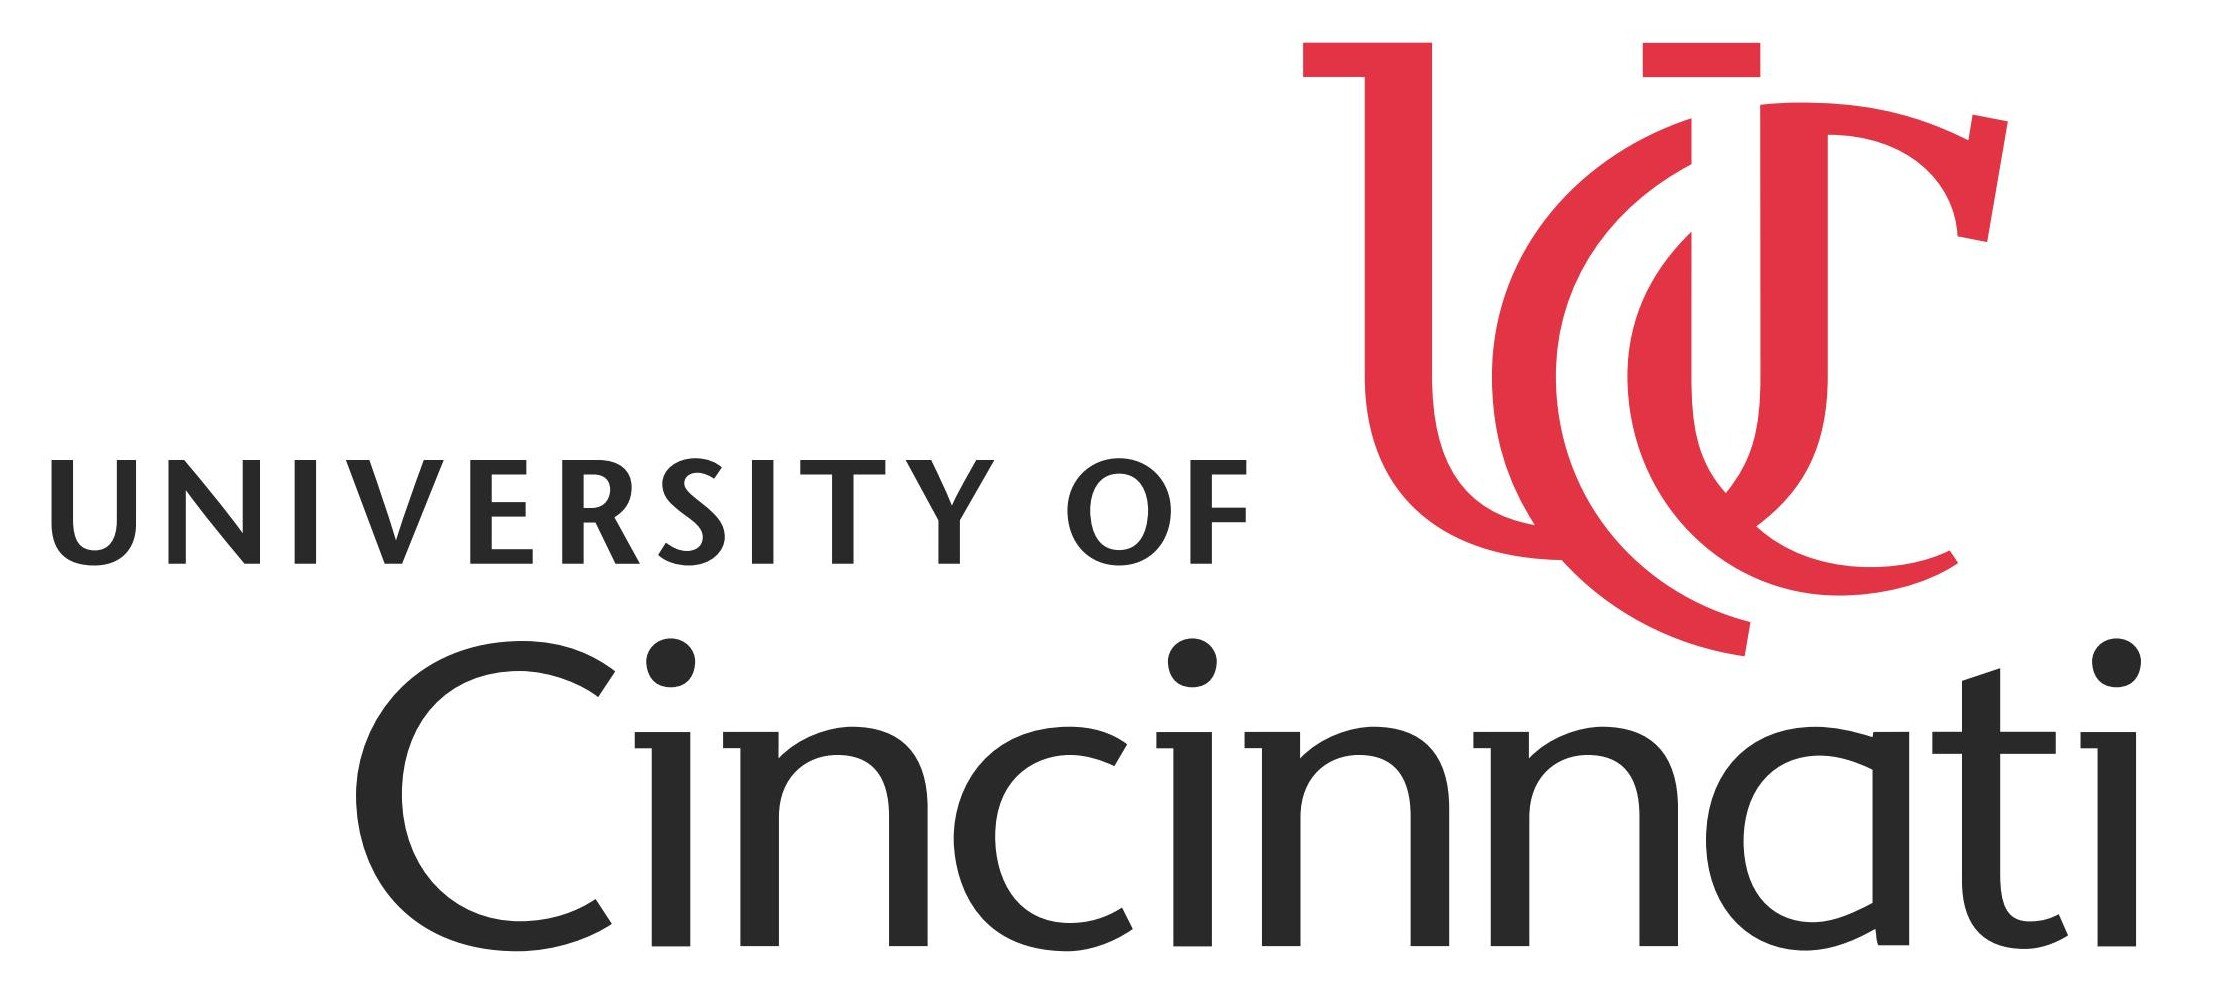 University_of_Cincinnati_logo.jpg